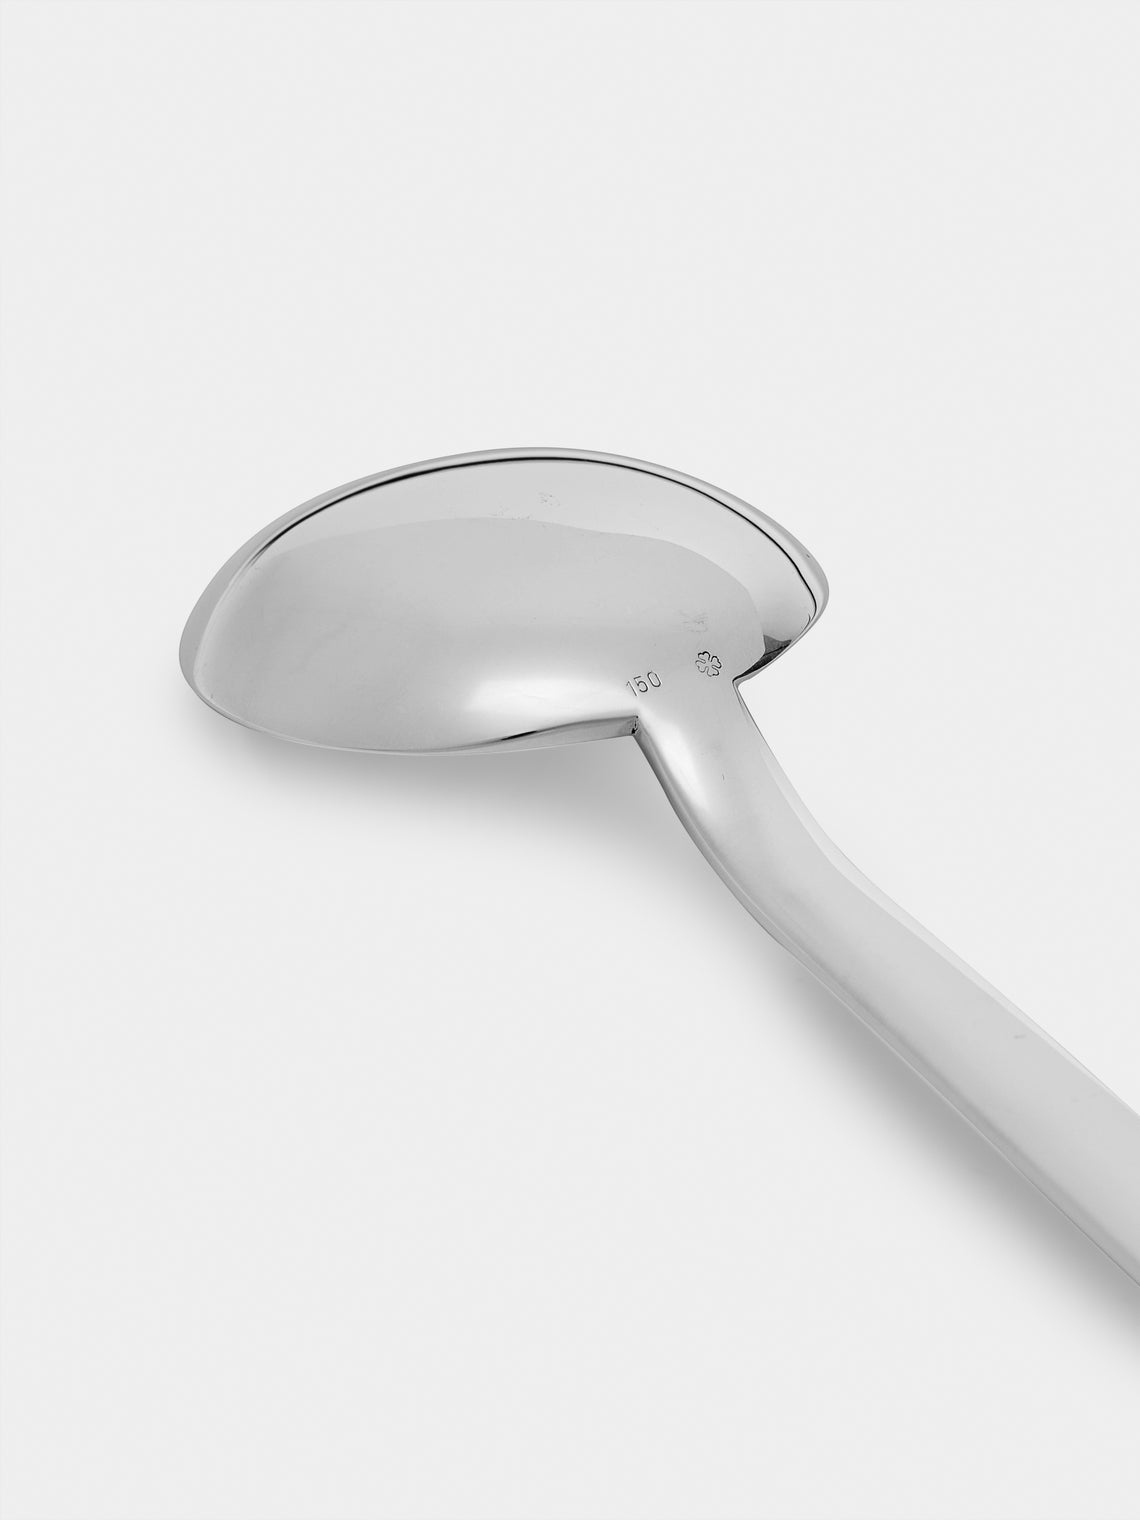 Wiener Silber Manufactur - Josef Hoffmann 135 Silver-Plated Dinner Spoon - Silver - ABASK